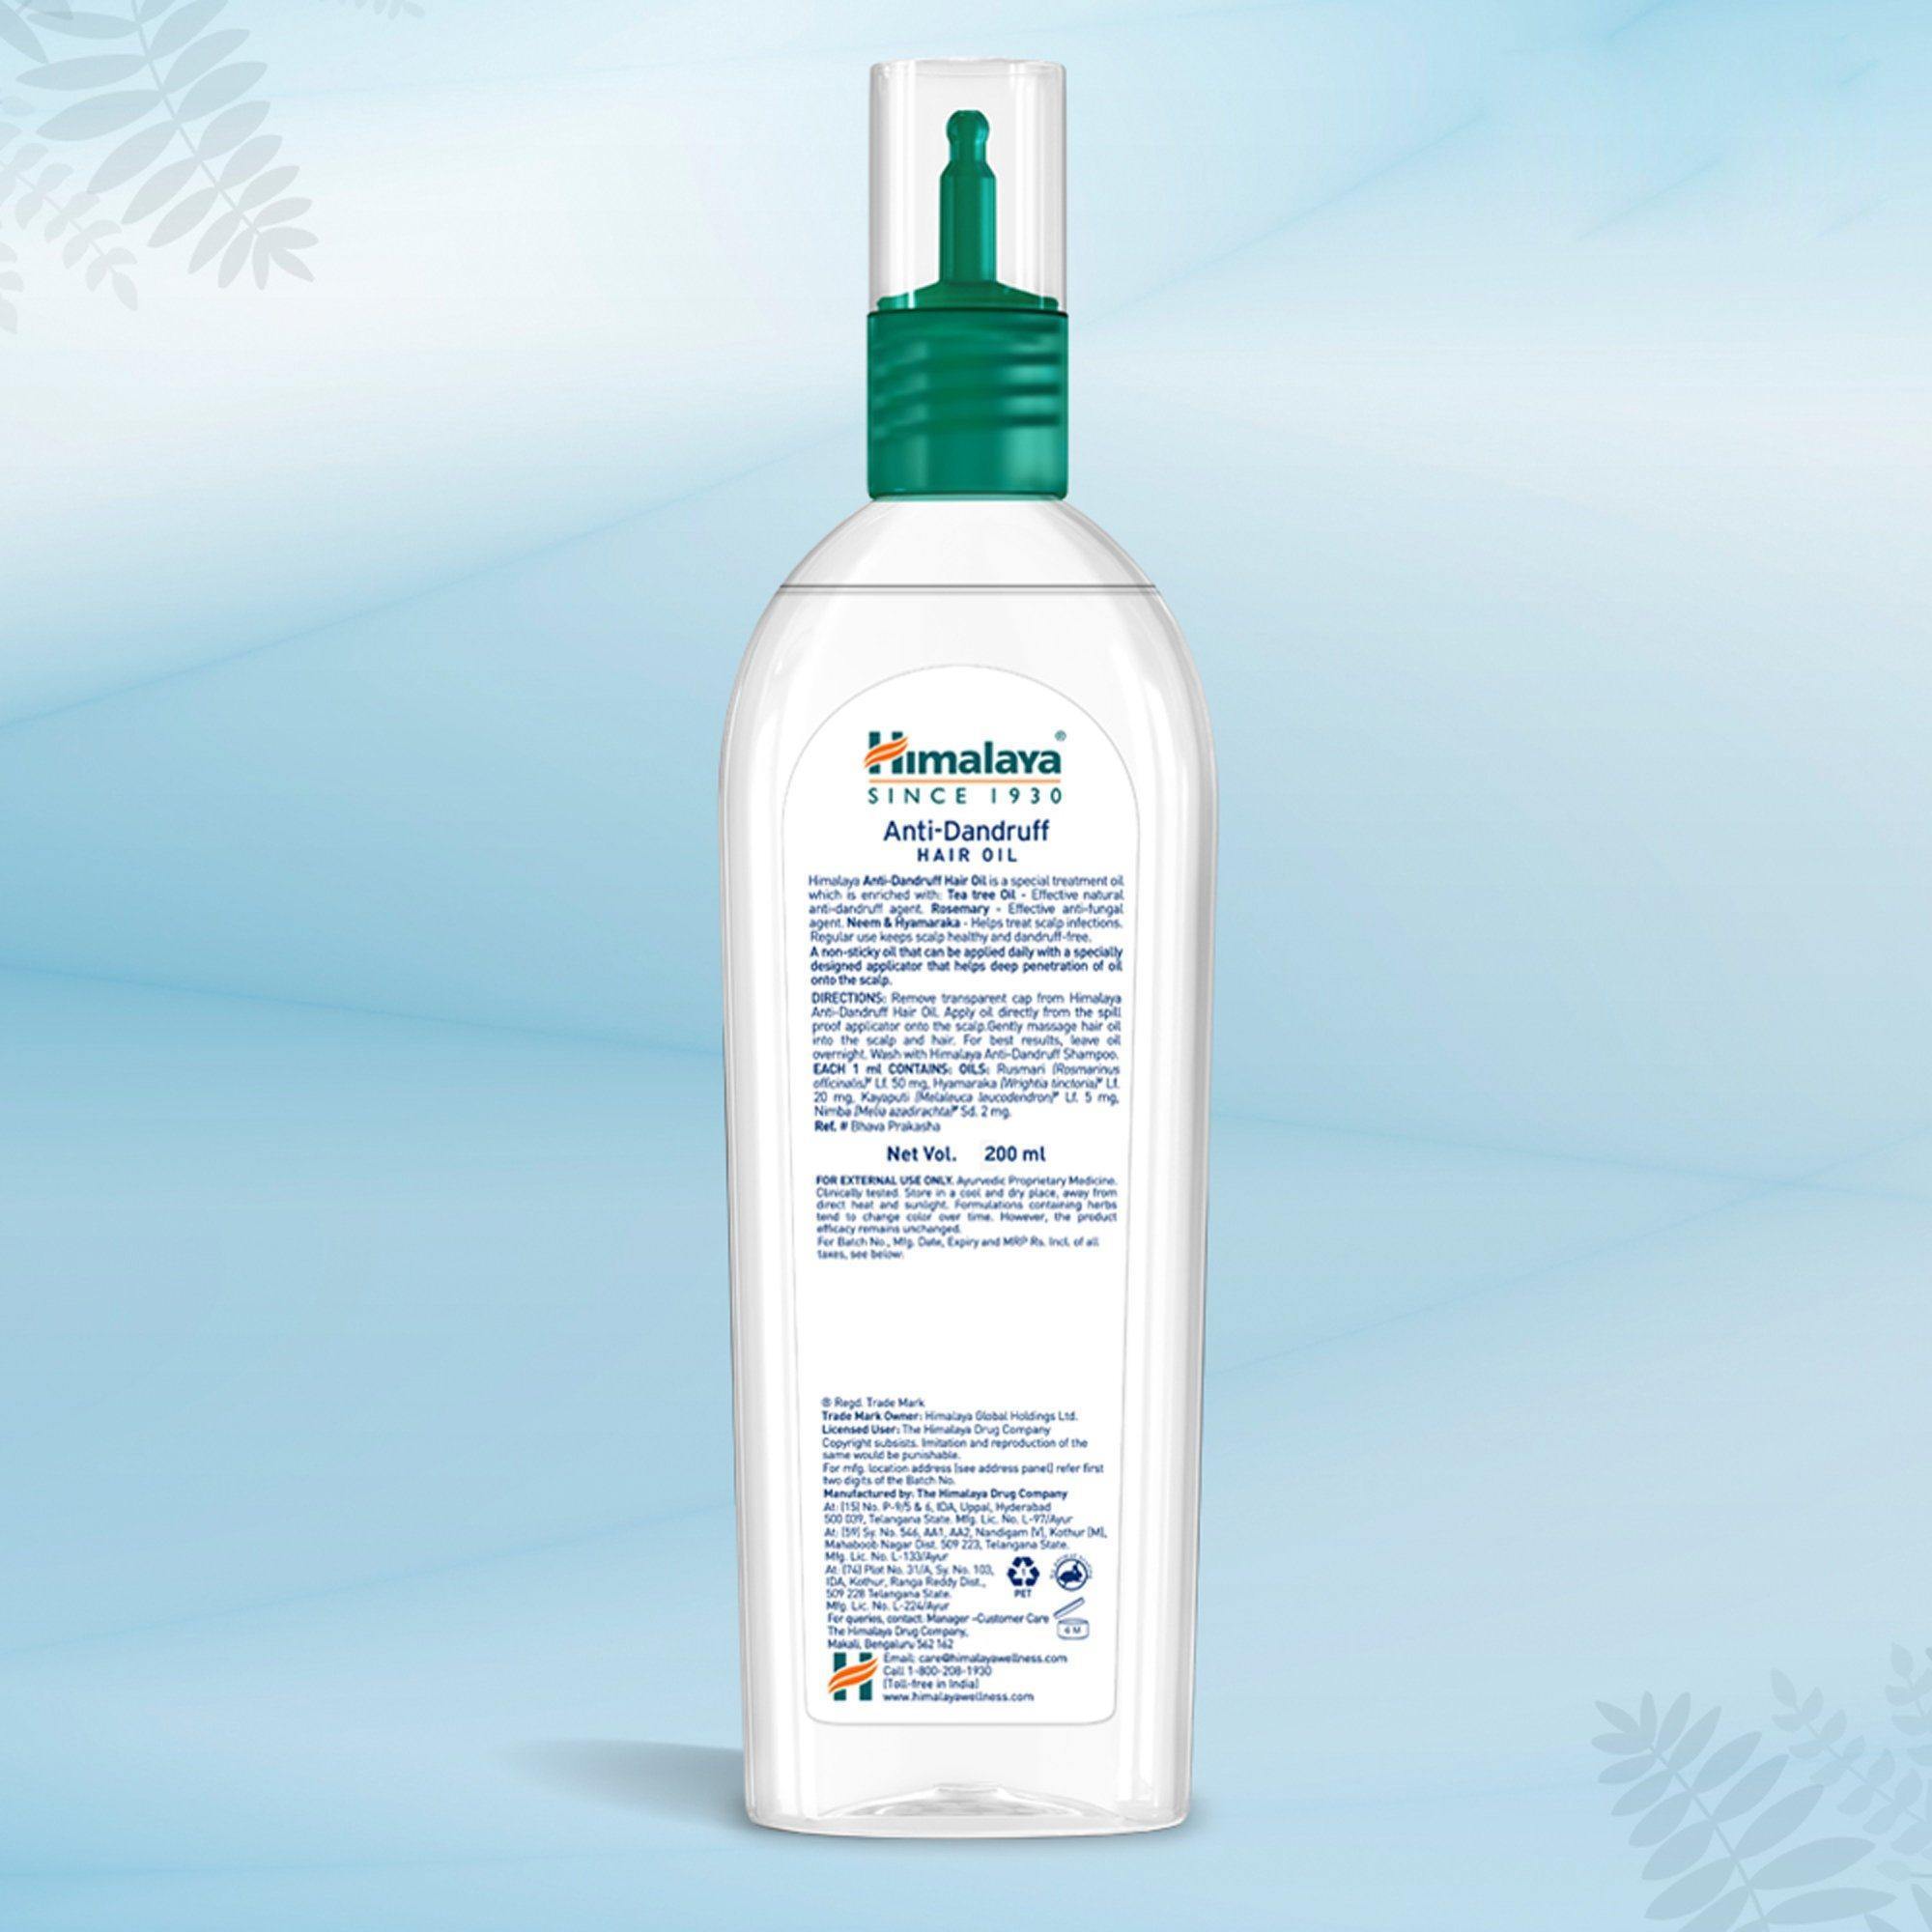 Himalaya Anti-Dandruff Hair Oil 200ml - Ingredients